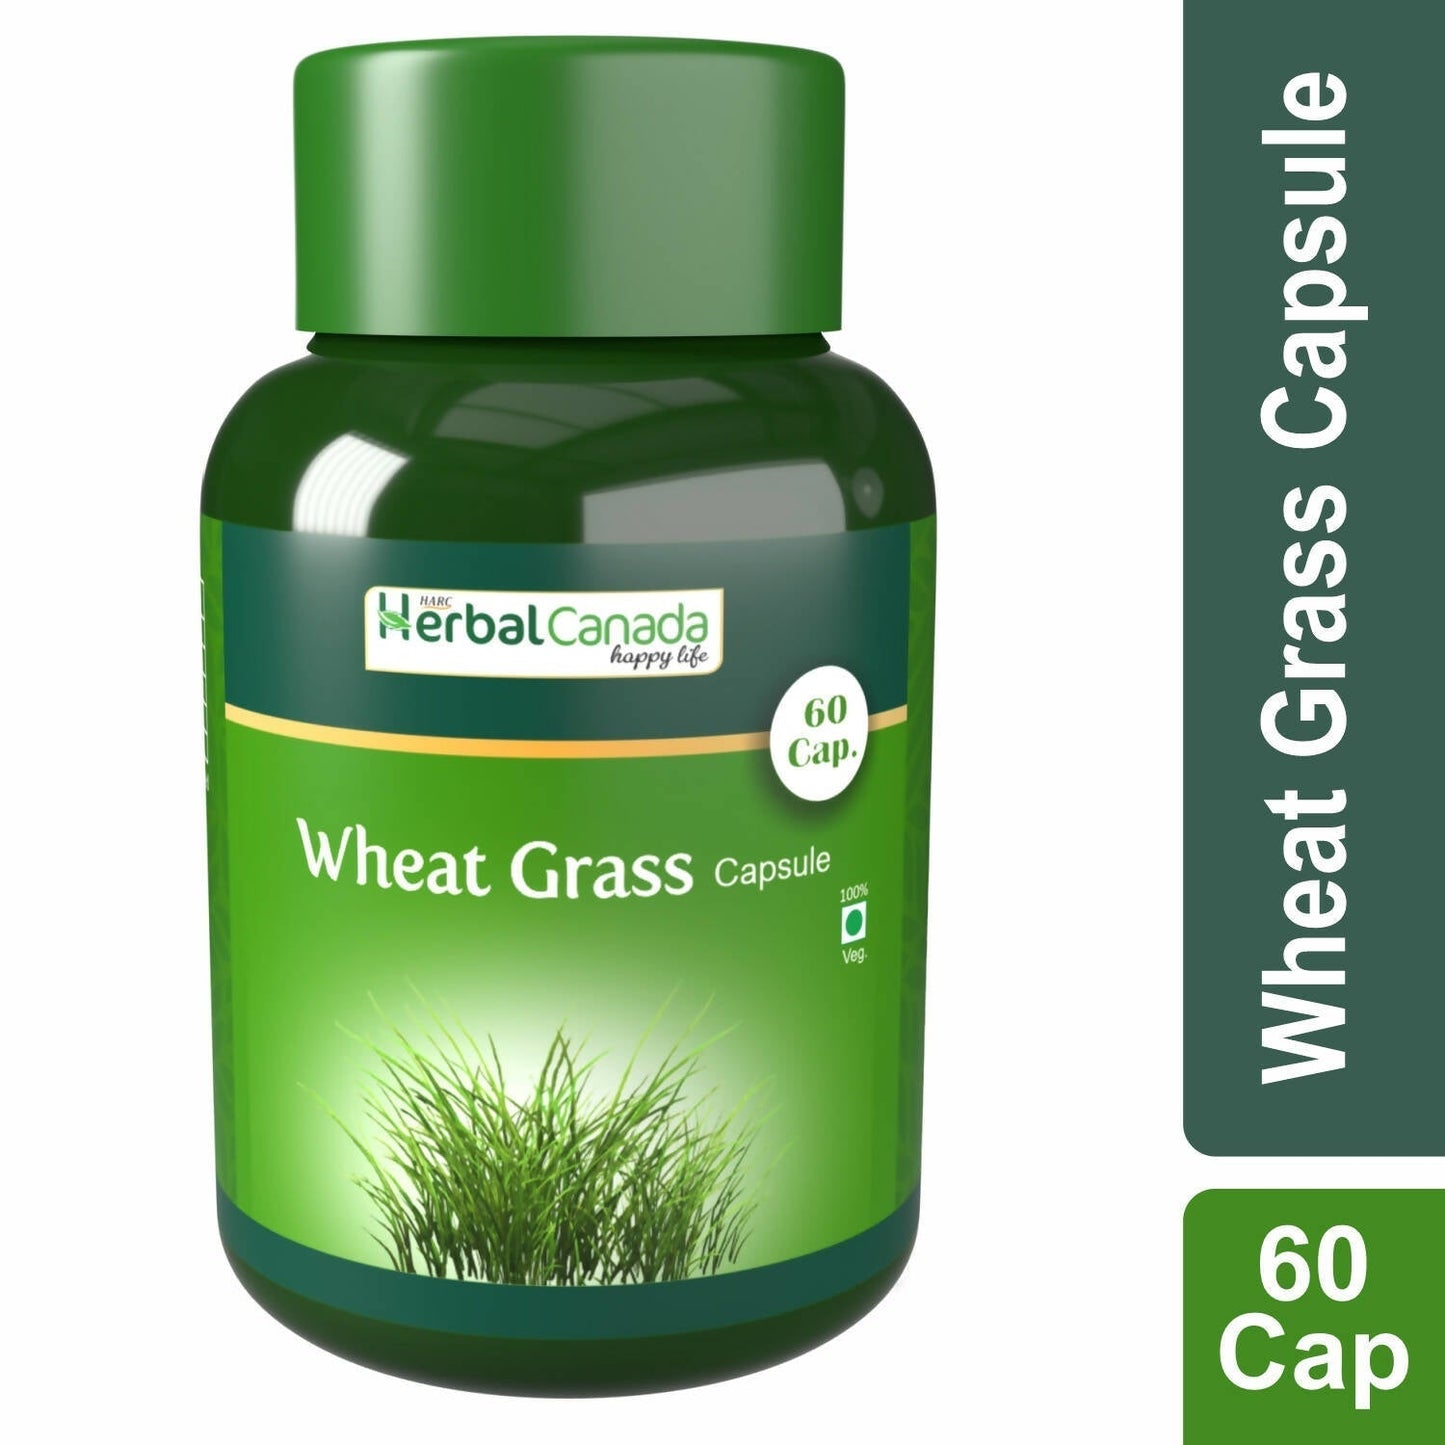 Herbal Canada Wheat Grass Capsules